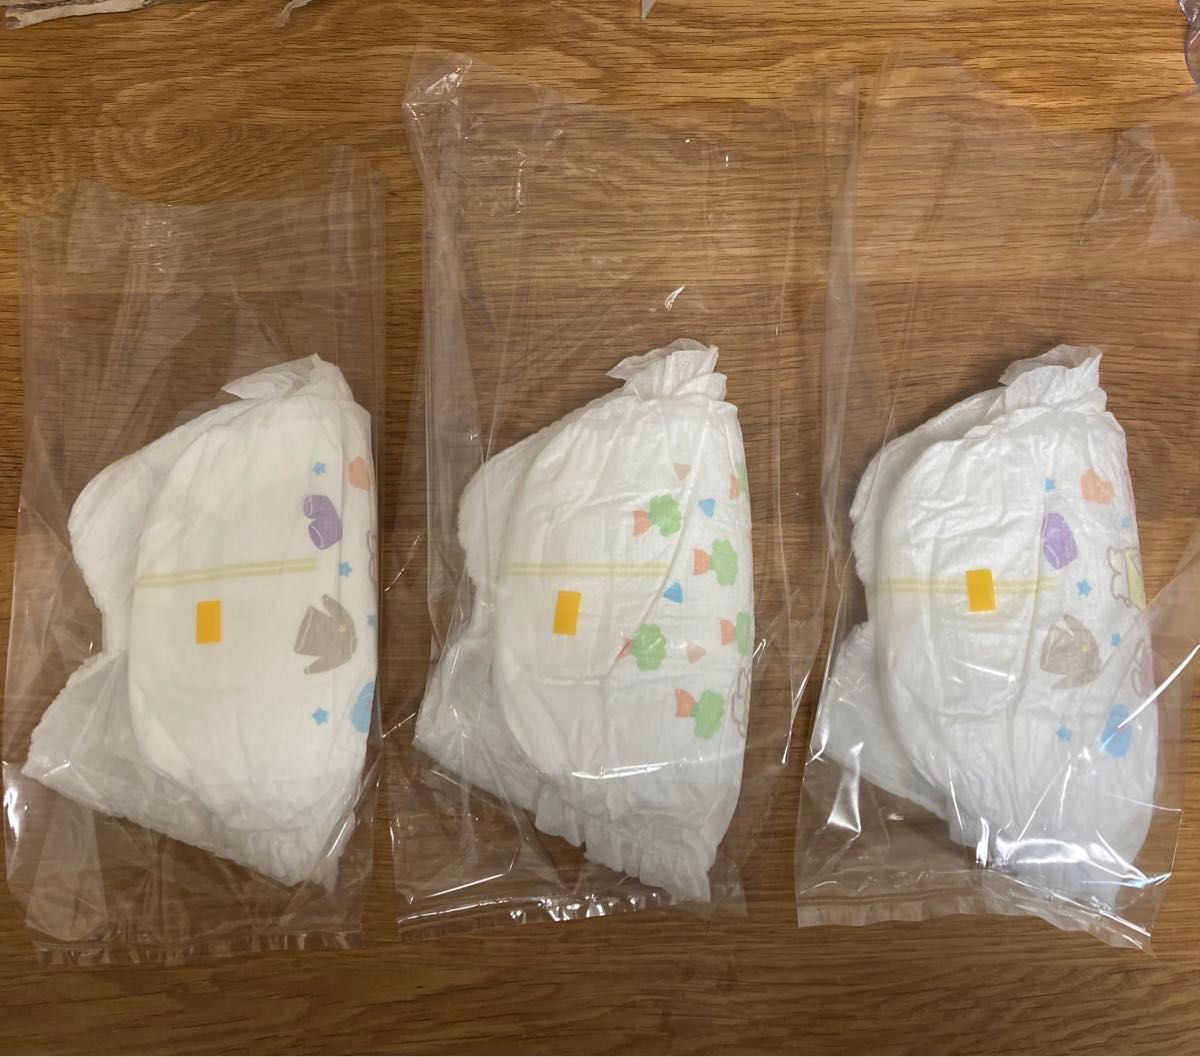 　HEIKO   食パン袋　厚めタイプ　1斤用　おむつ袋　パン袋【100枚】　